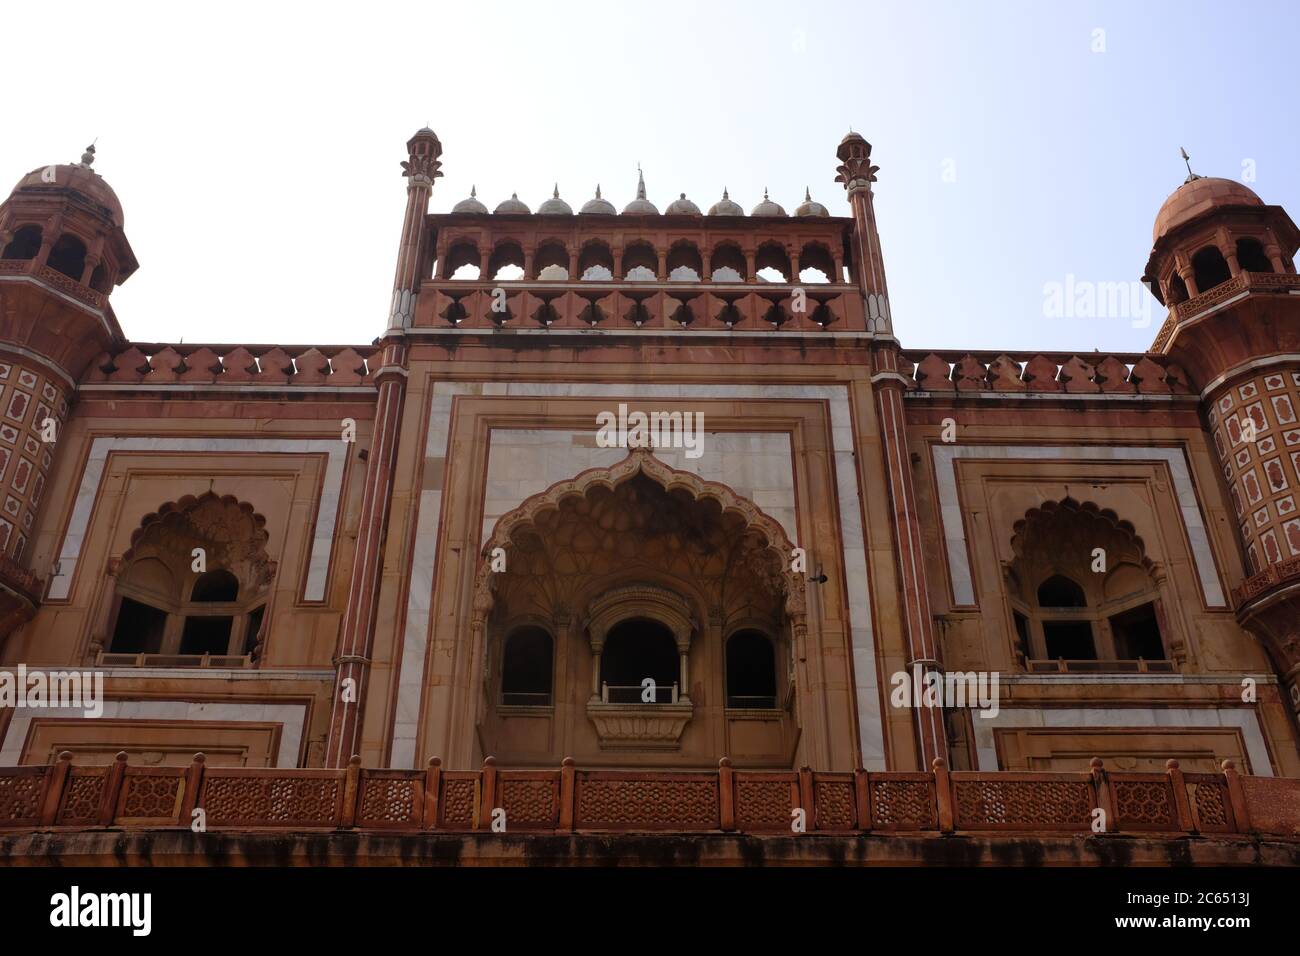 Photograph showcasing the main entrance, minarets, and balconies of Safdar Jang tomb, Delhi, India Stock Photo